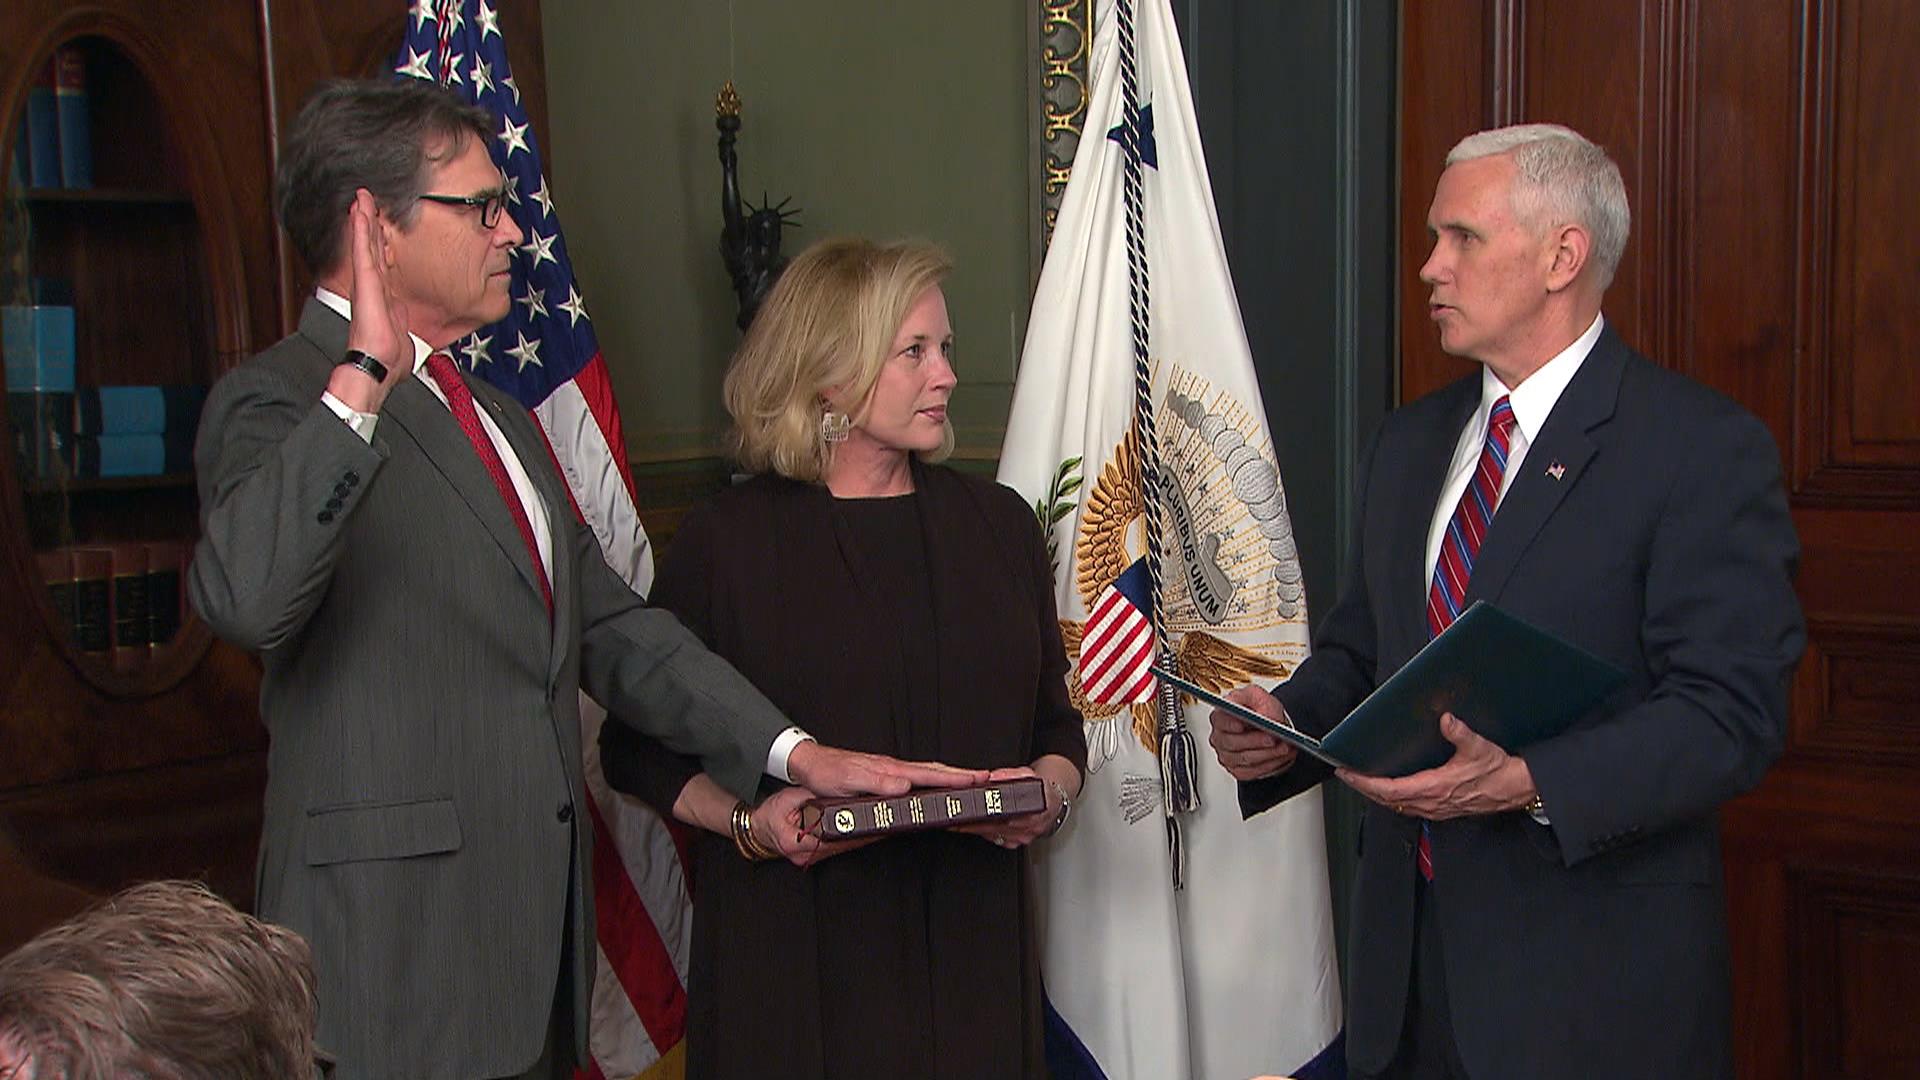 Rick Perry sworn in as Energy Secretary, Ben Carson at HUD